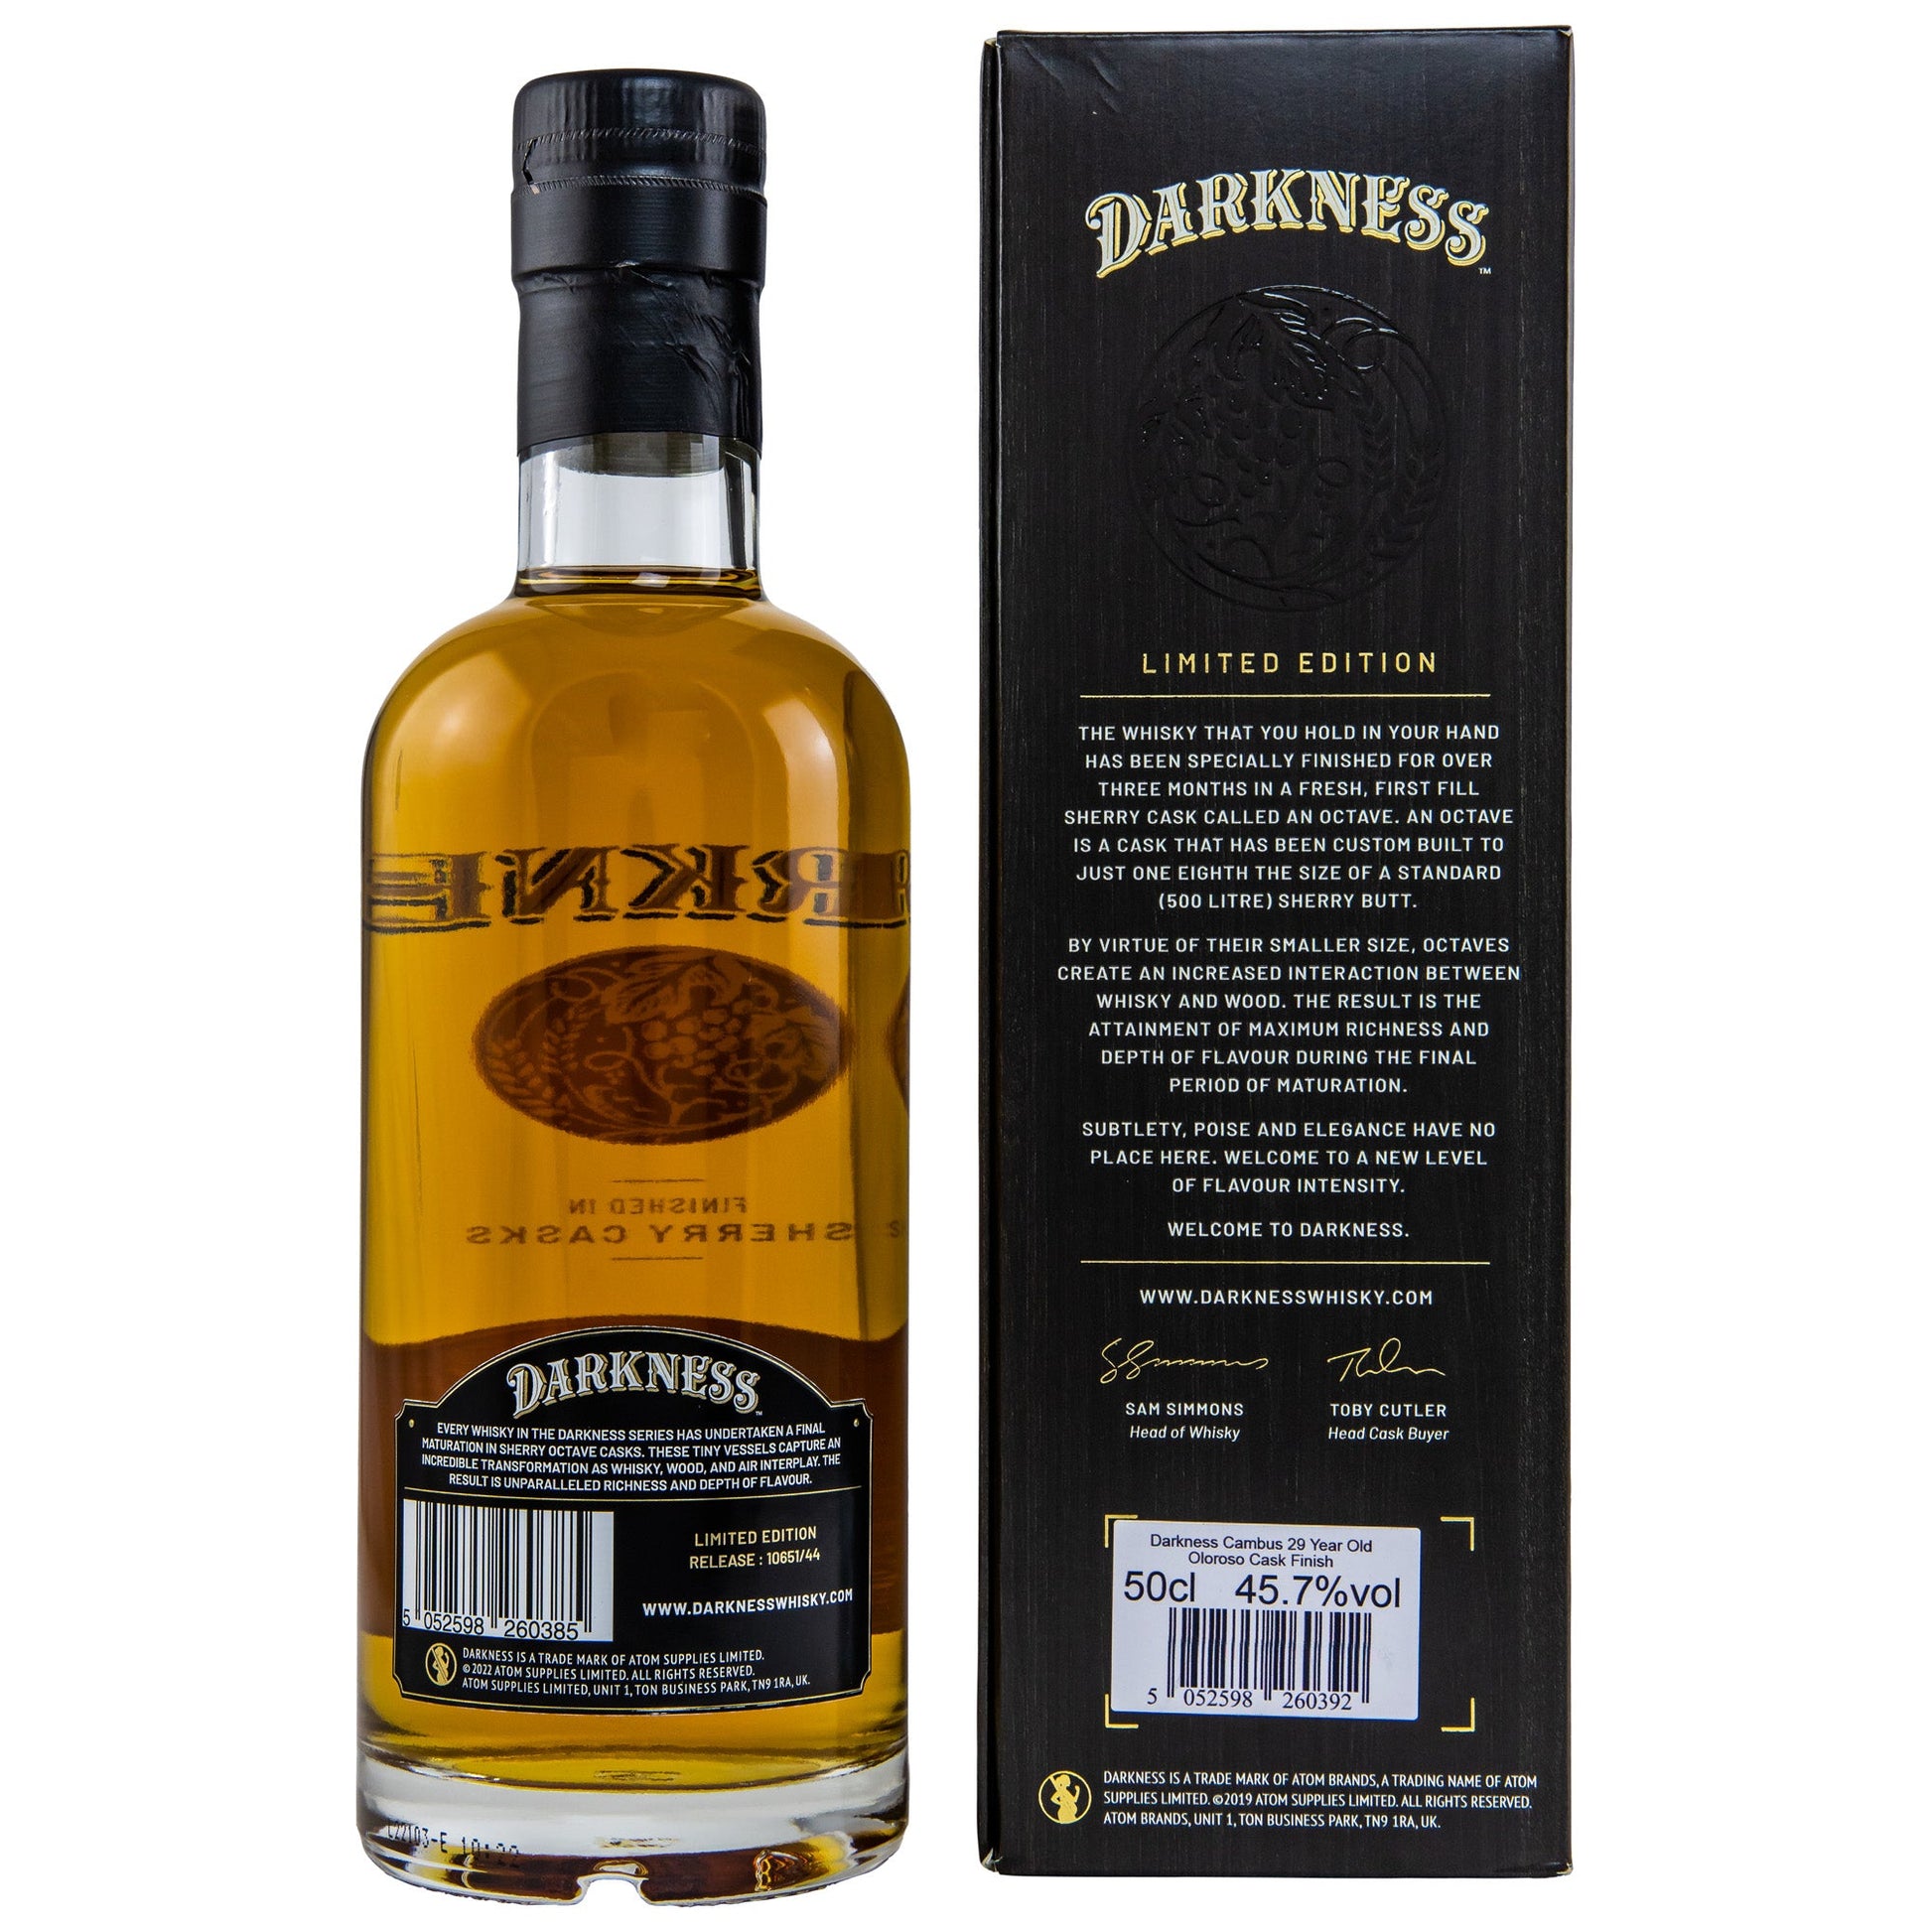 Cambus | 29 Jahre | Darkness | Oloroso Cask Finish | Single Grain Scotch Whisky | 0,5l | 45,7%GET A BOTTLE